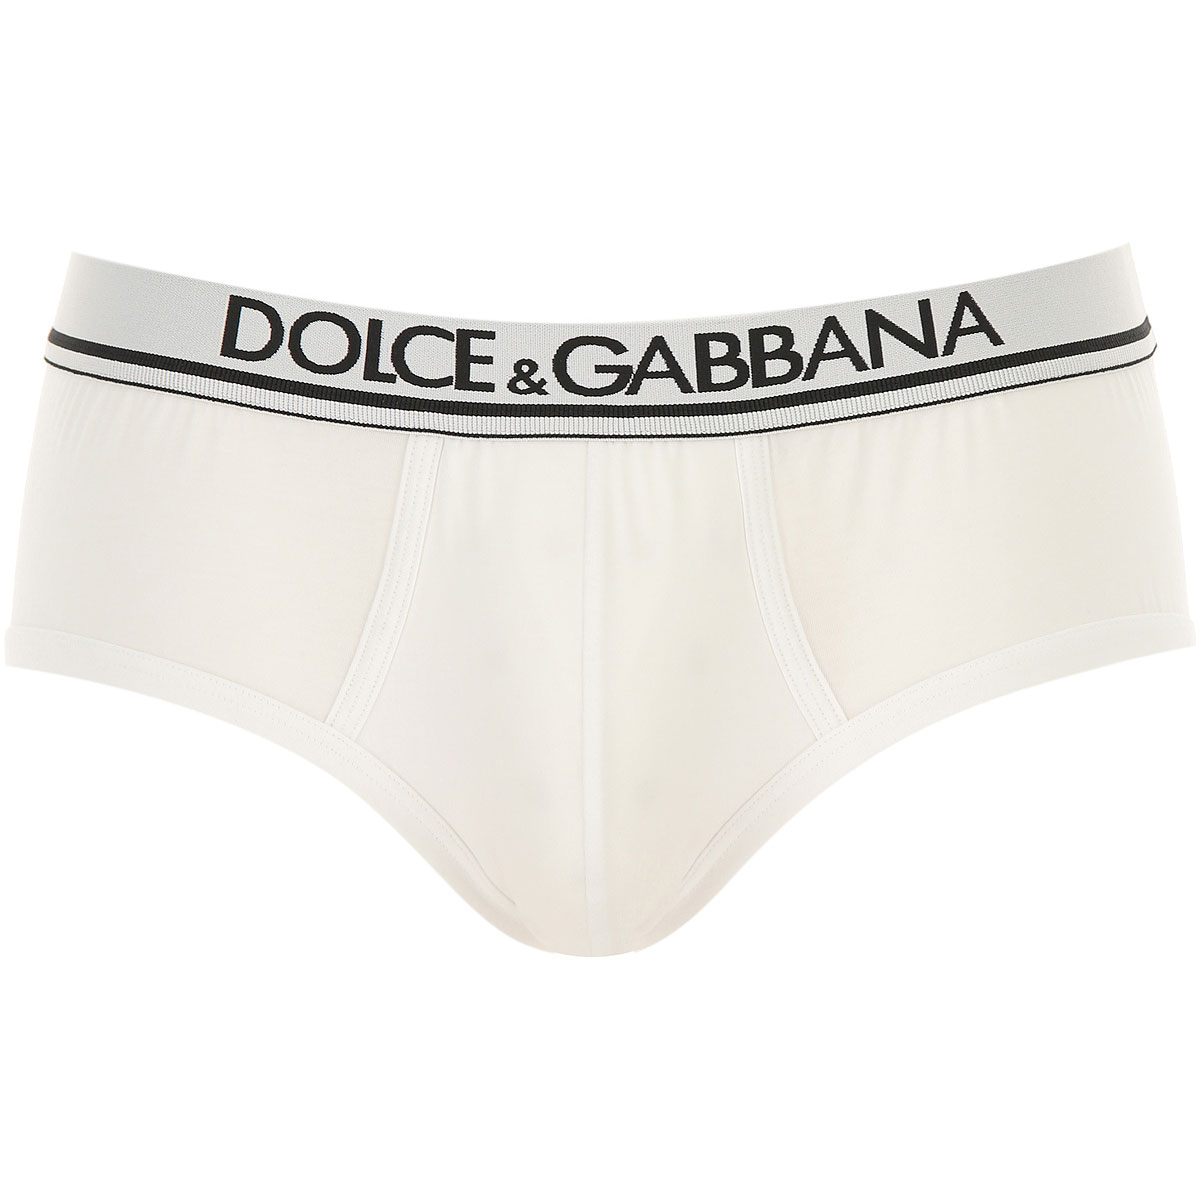 Mens Underwear Dolce & Gabbana, Style code: m3b73j-fueb0-w0800